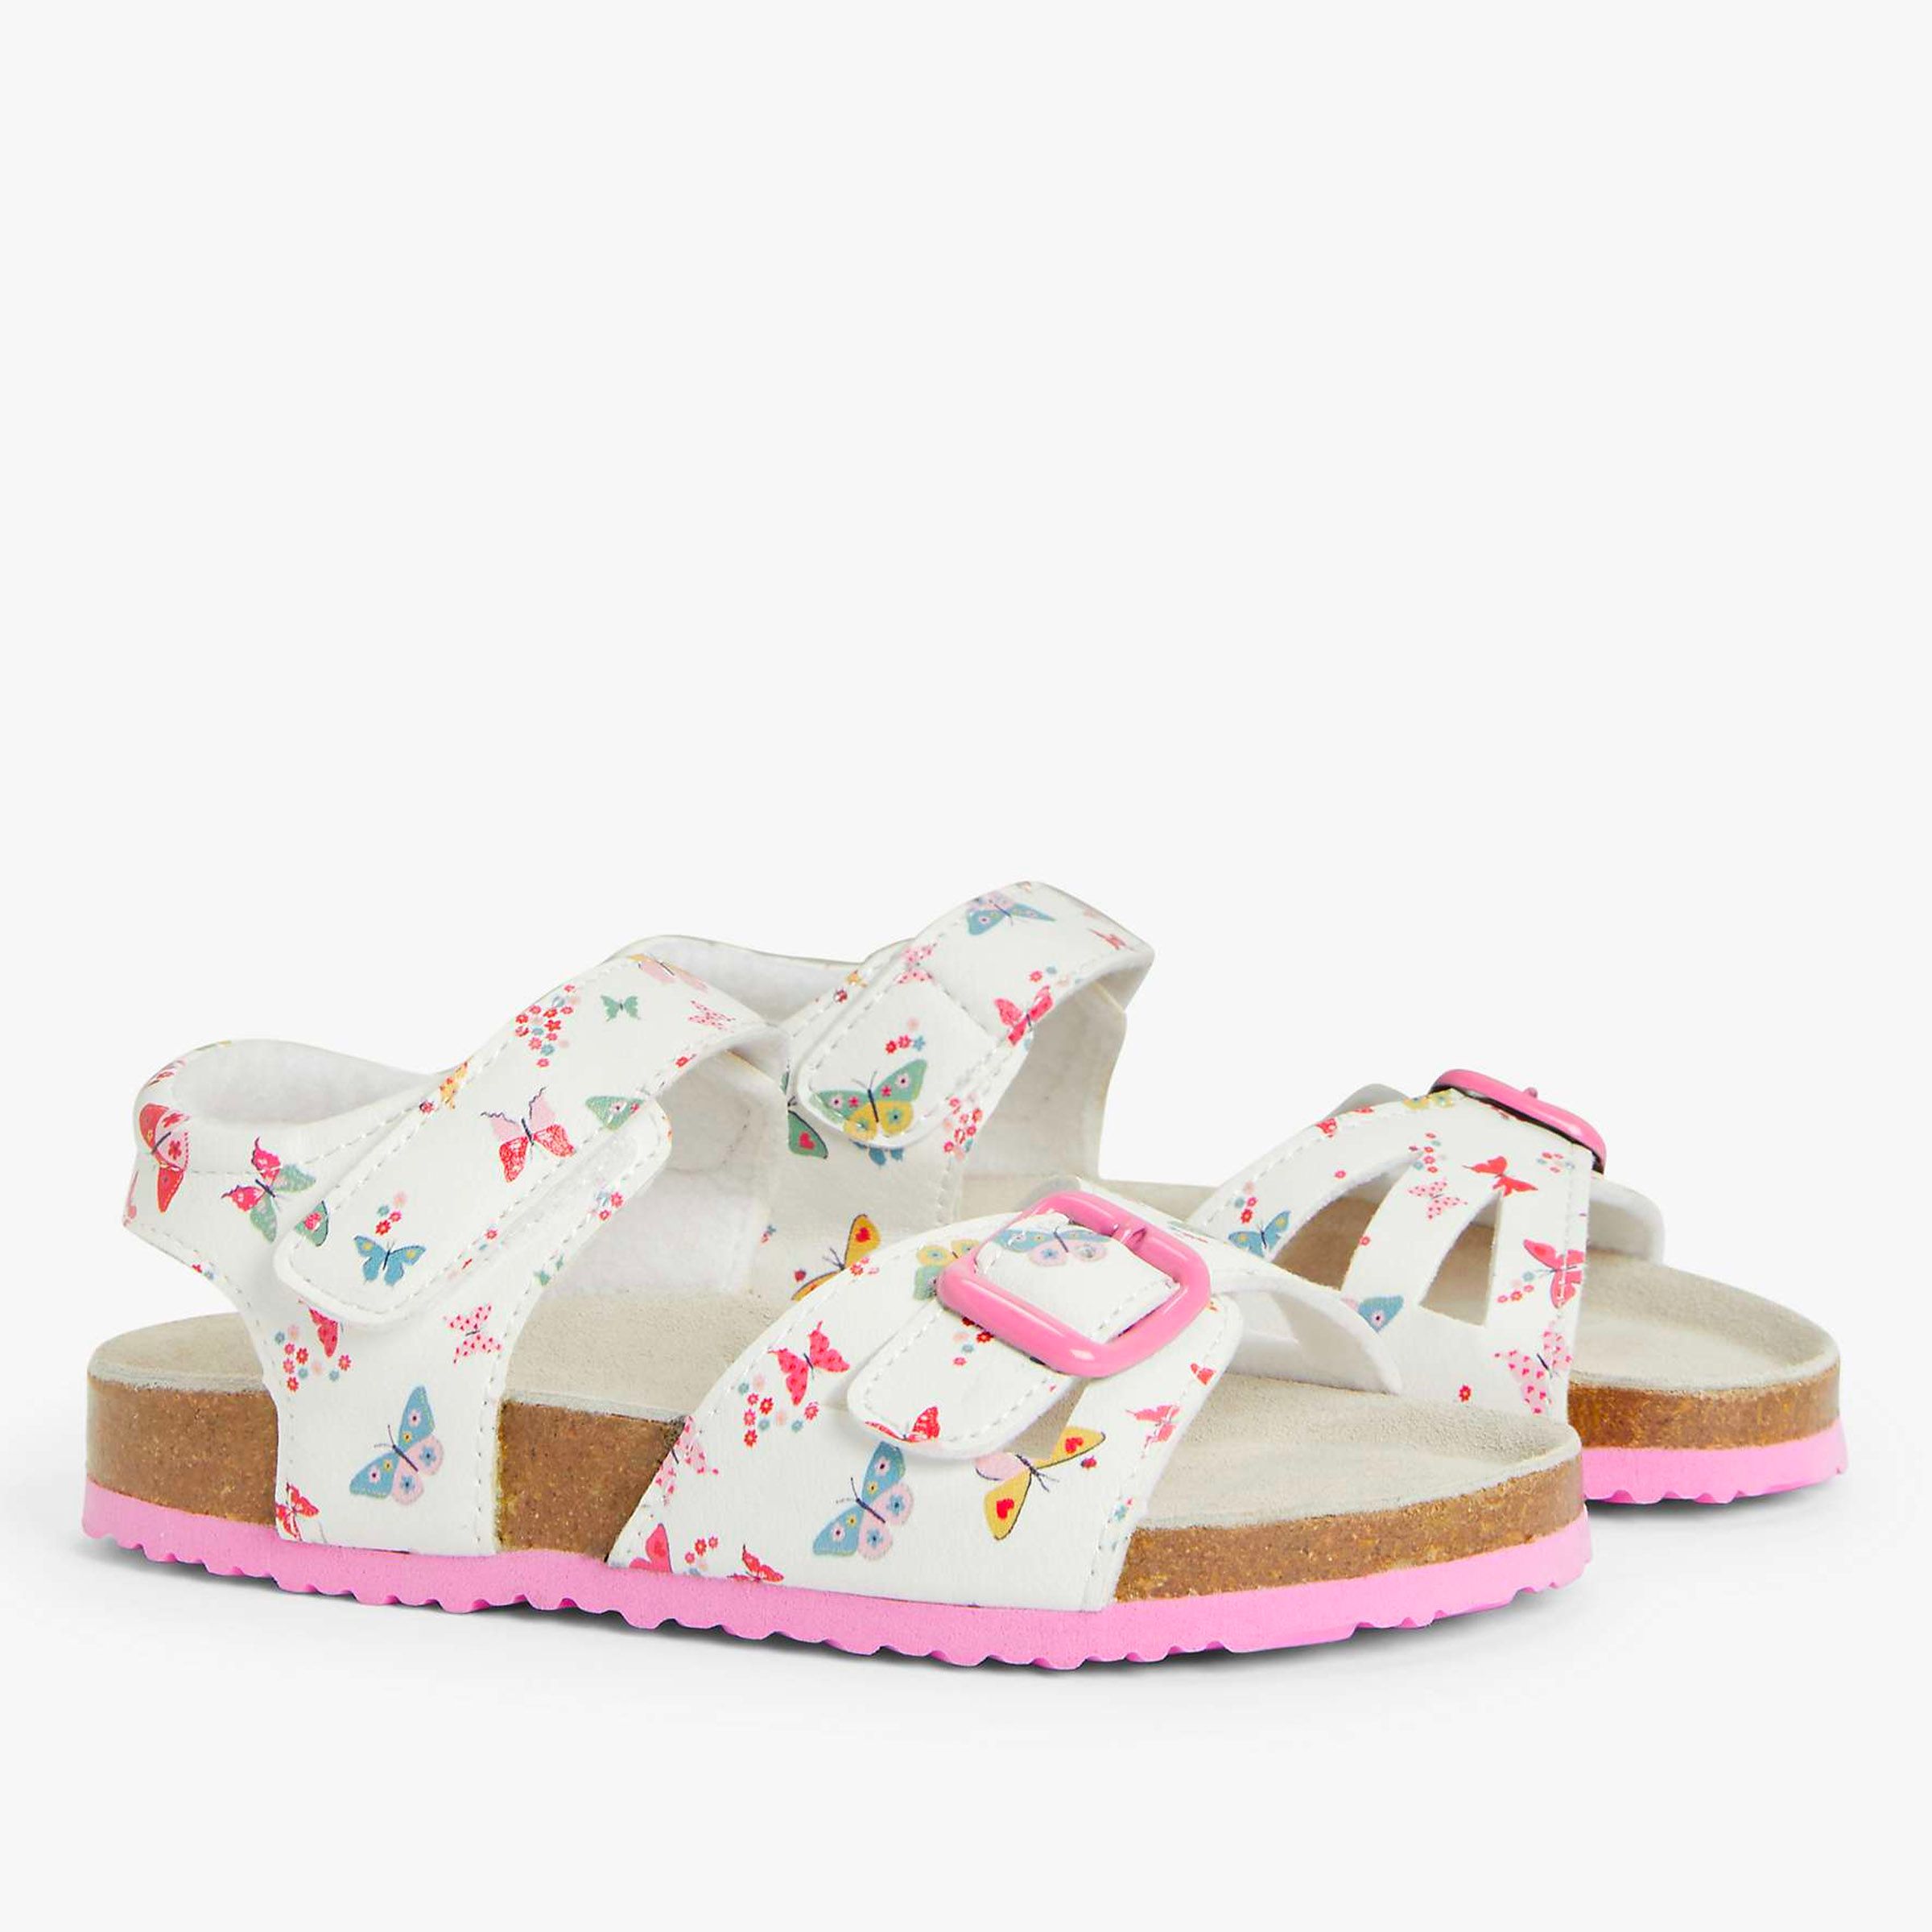 clarks sandals toddler girl